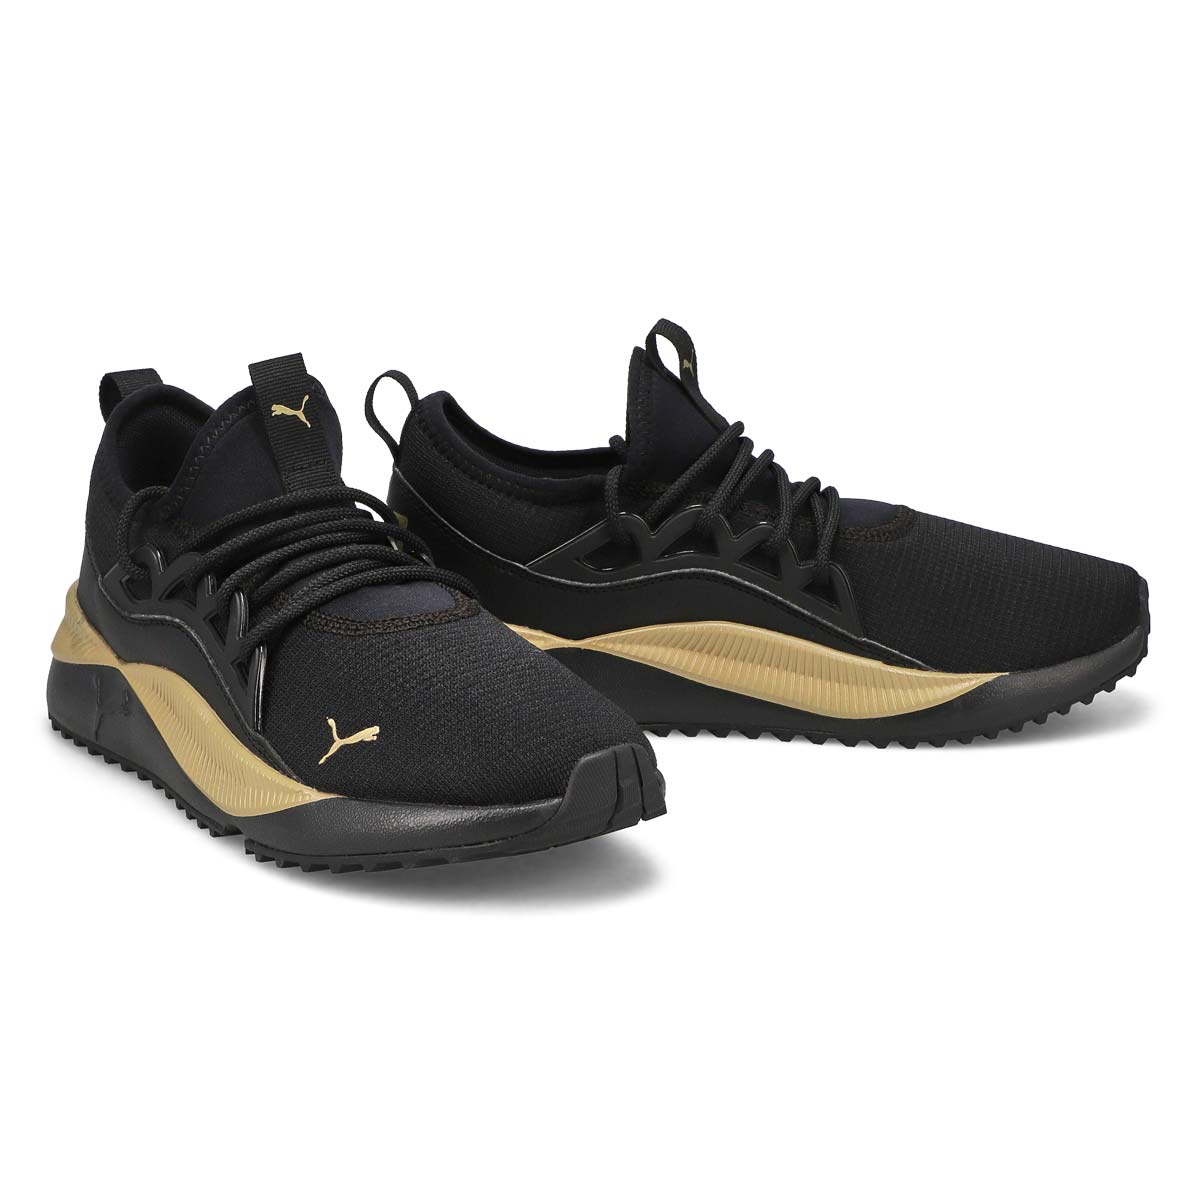 Women's Pacer Future Allure Sneaker - Black/Gold